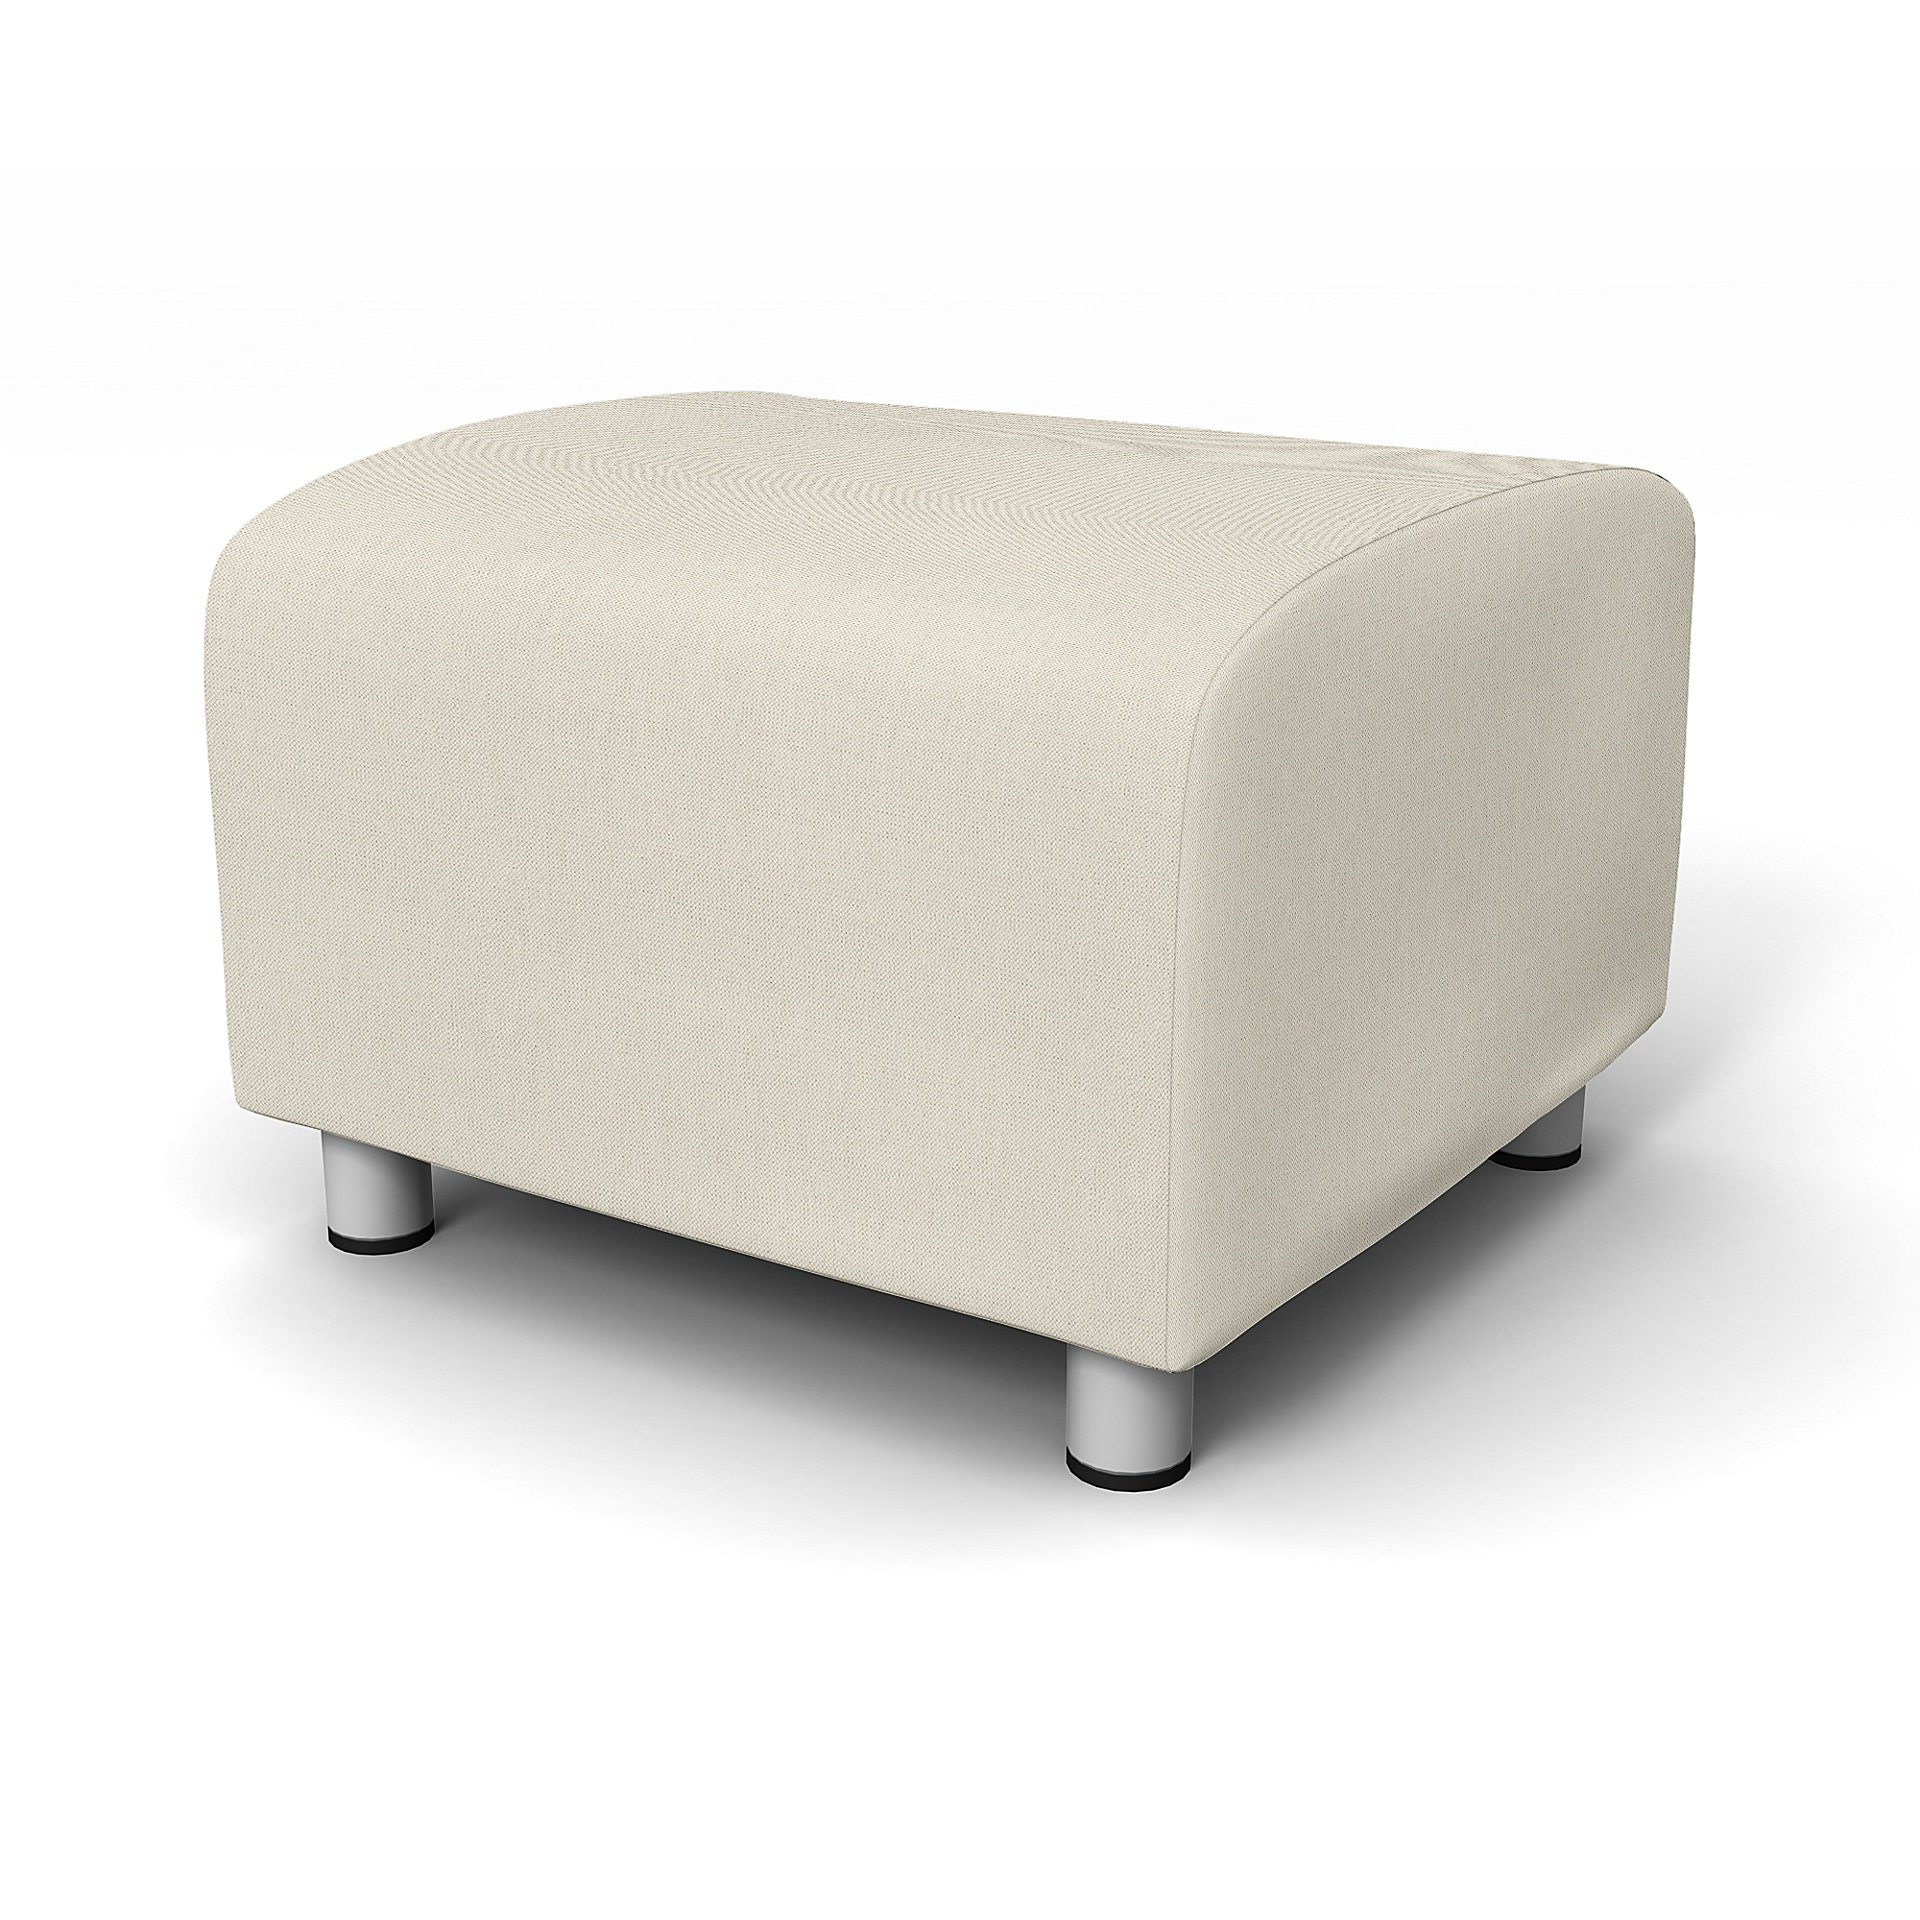 IKEA - Klippan Footstool Cover, Unbleached, Linen - Bemz